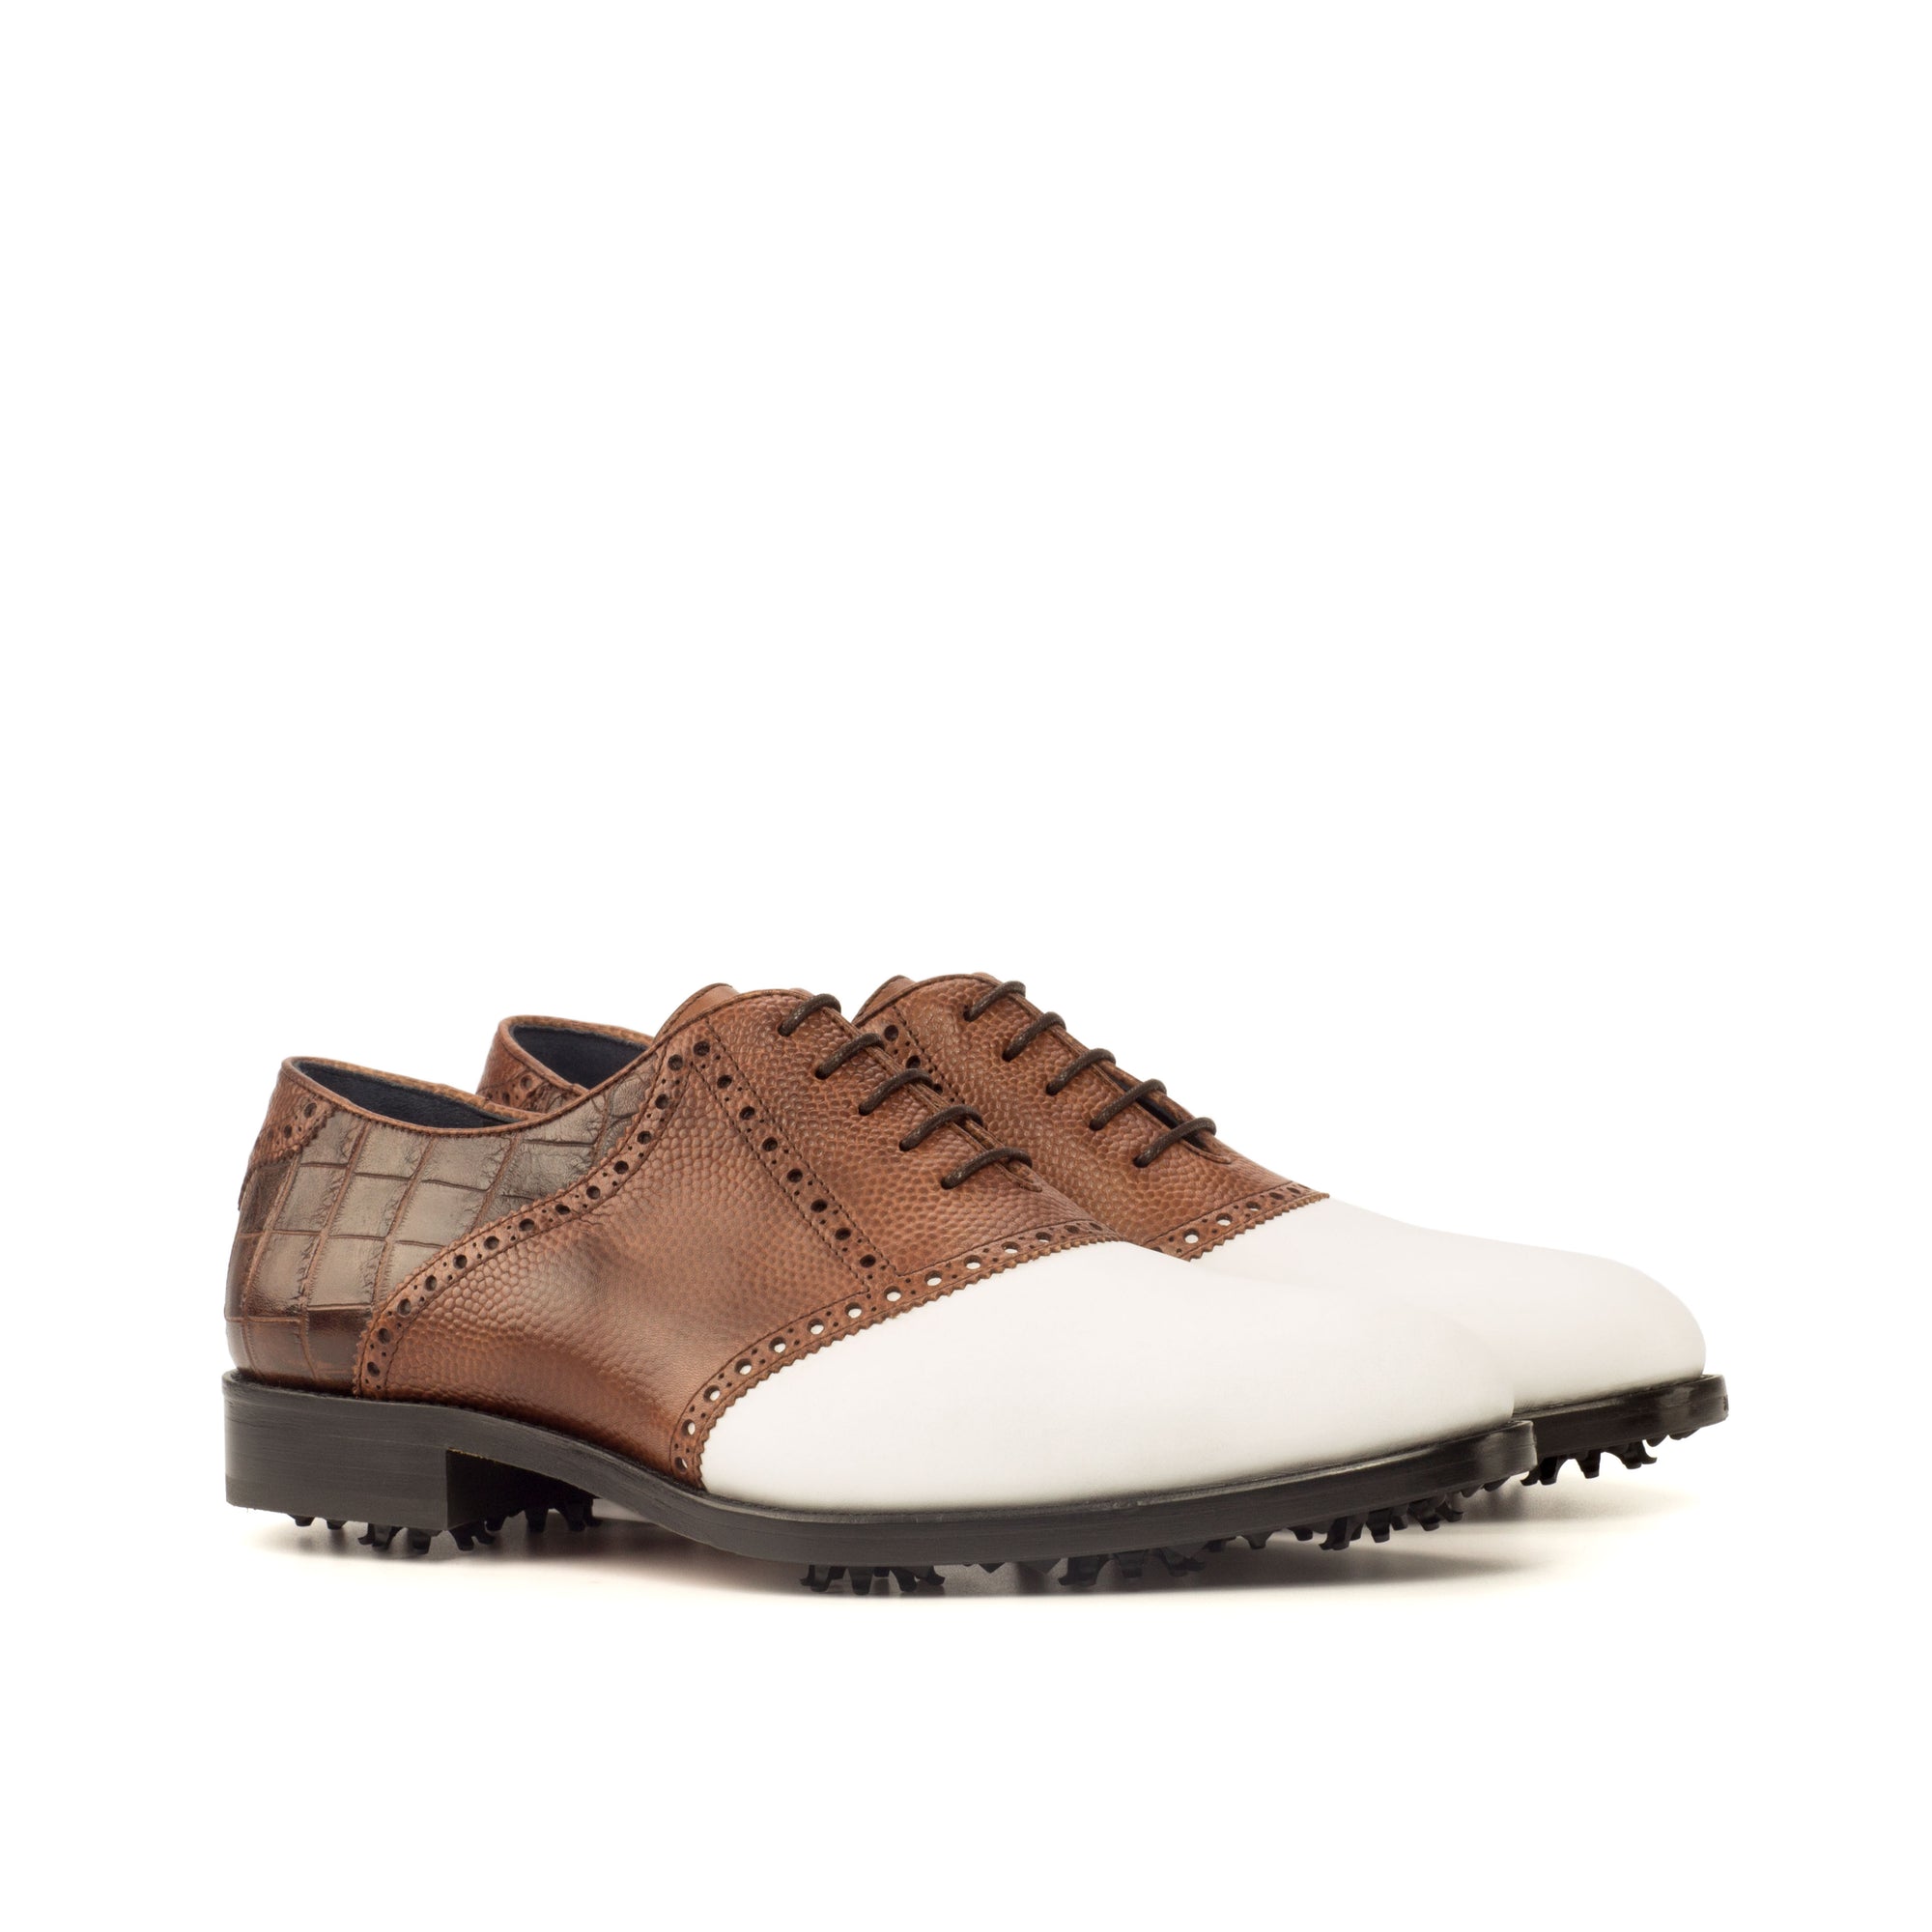 Custom Golf Shoes - Chocolate Croco, Luxury Custom Golf Shoes